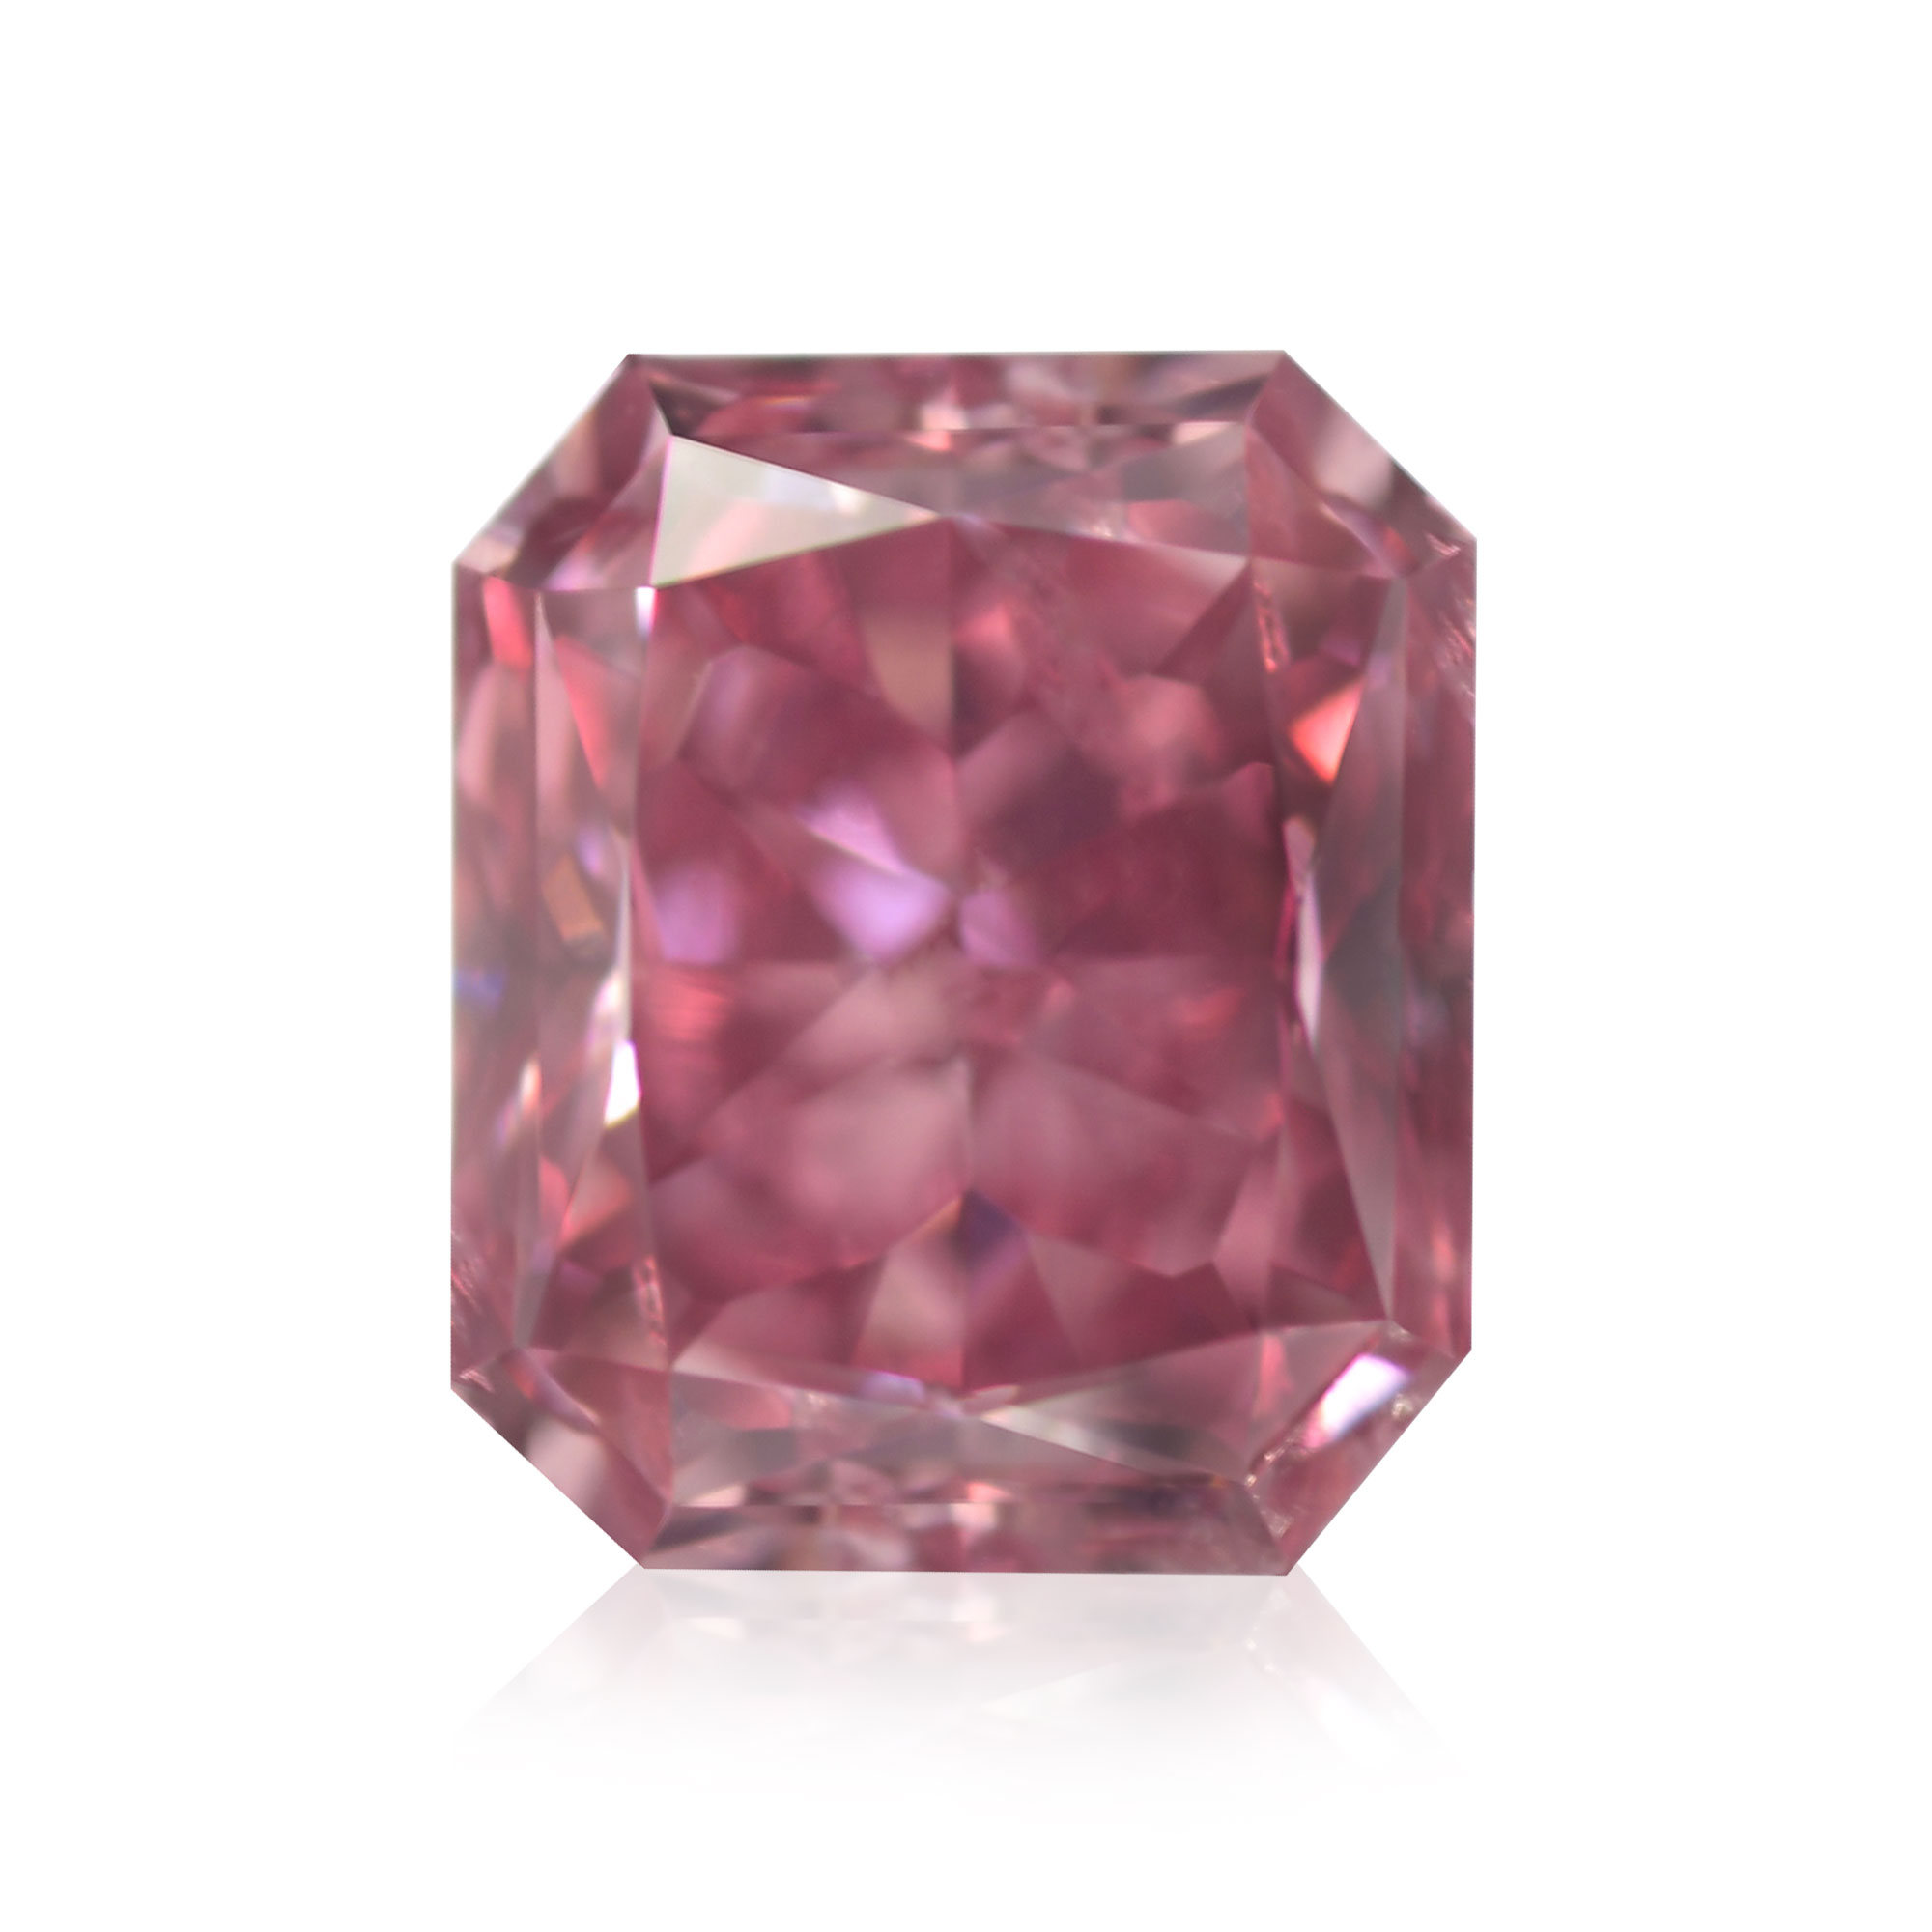 1.00 carat, Fancy Vivid Pink, Radiant Shape, SI2 Clarity, GIA, SKU 135737